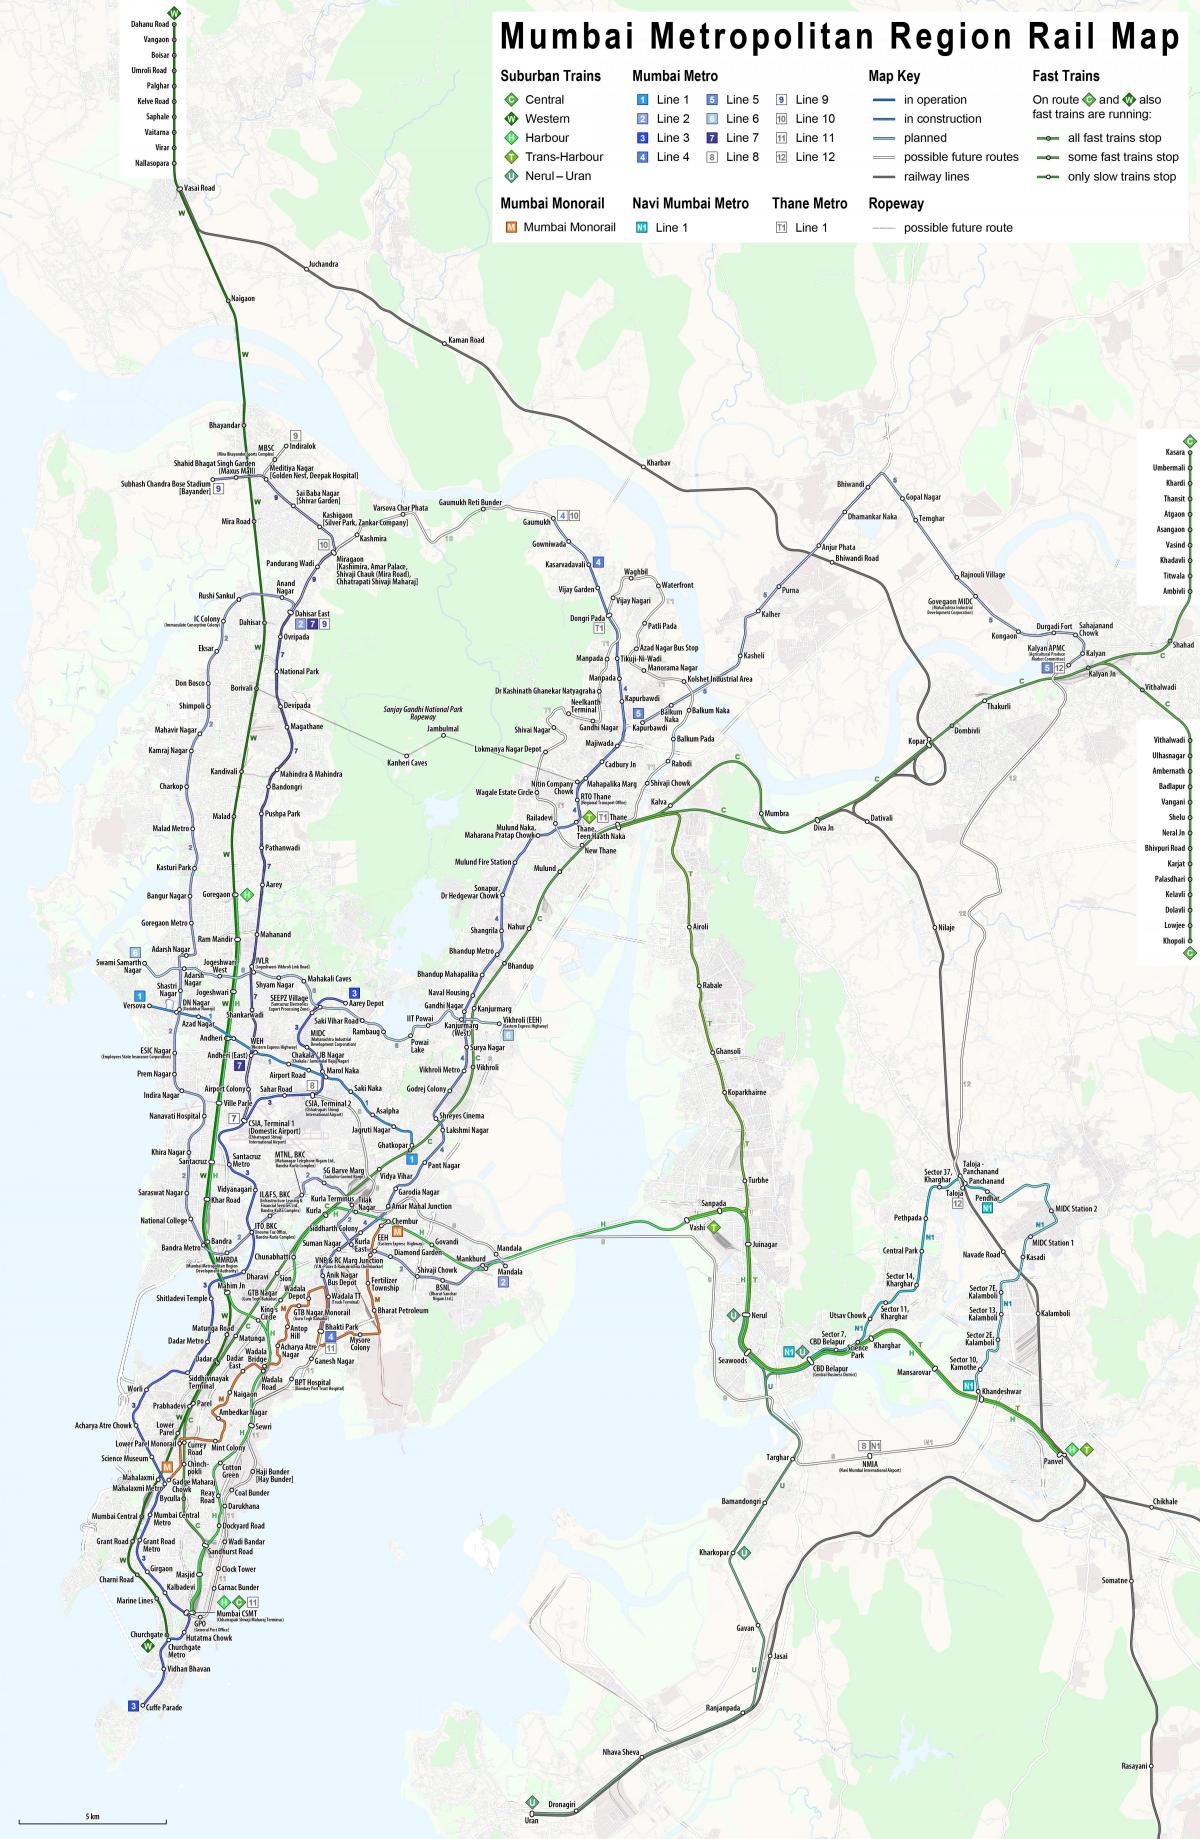 Plan du chemin de fer de Mumbai - Bombay